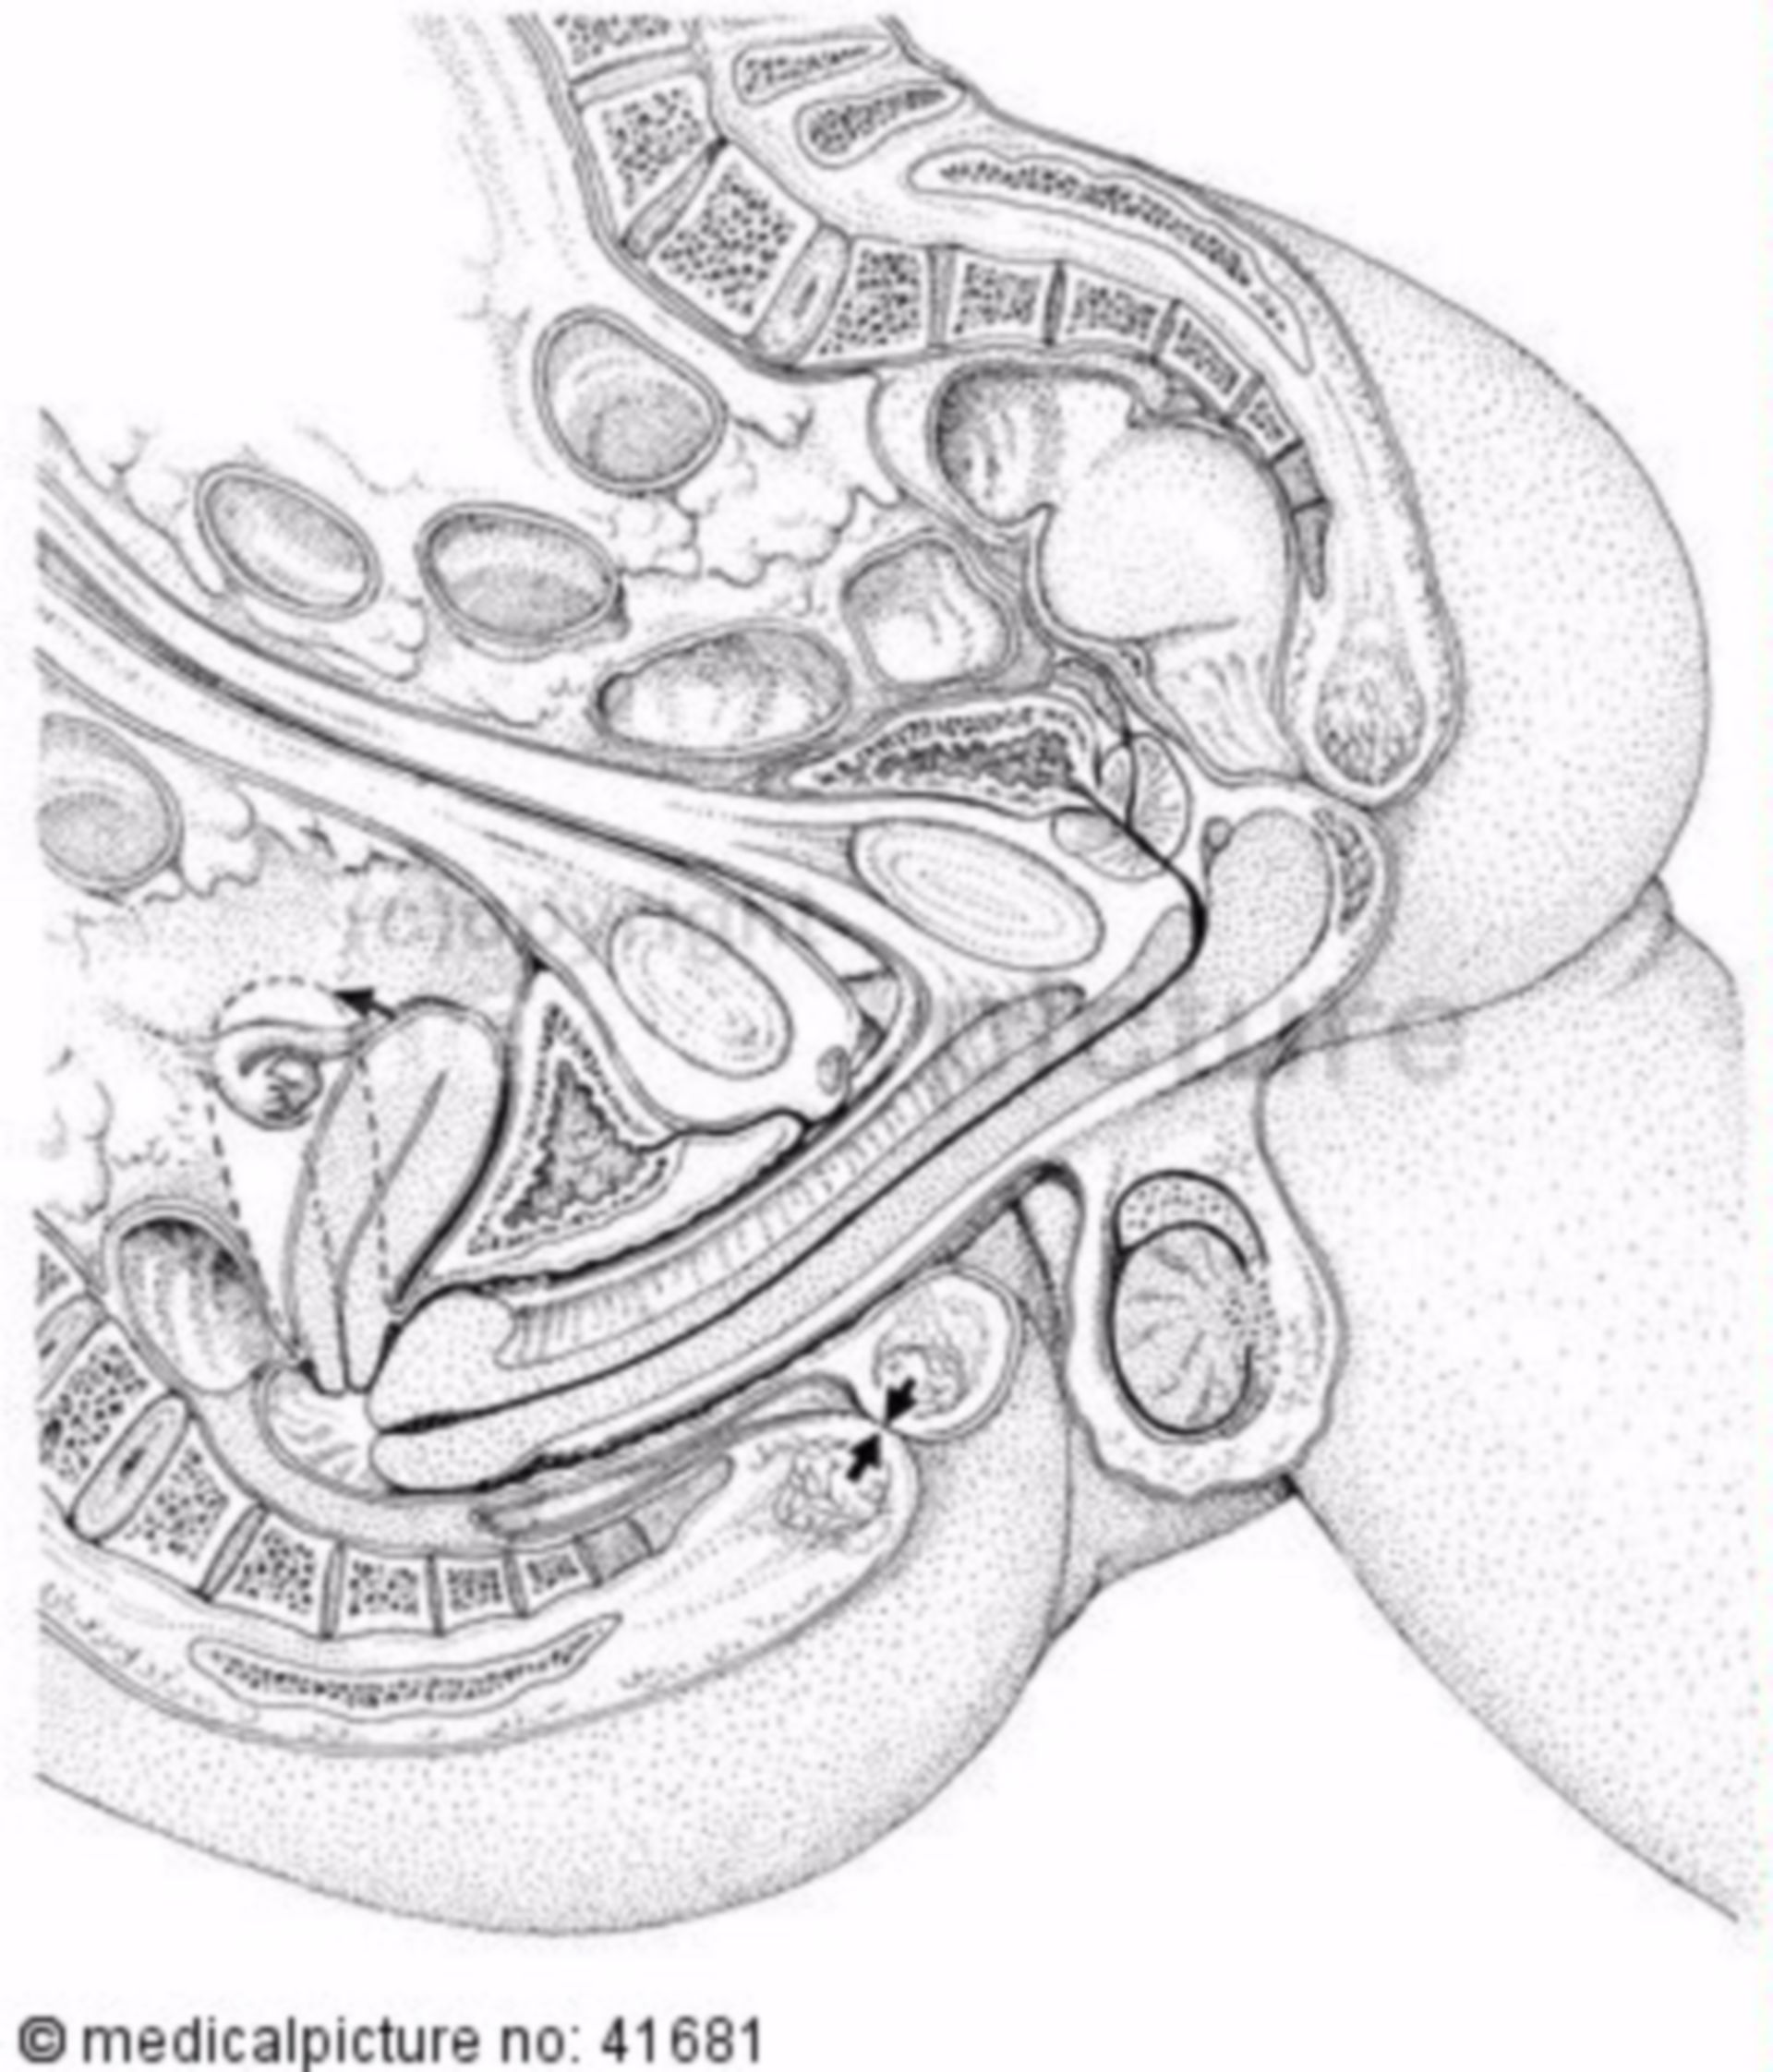 анатомия женского анала фото 22